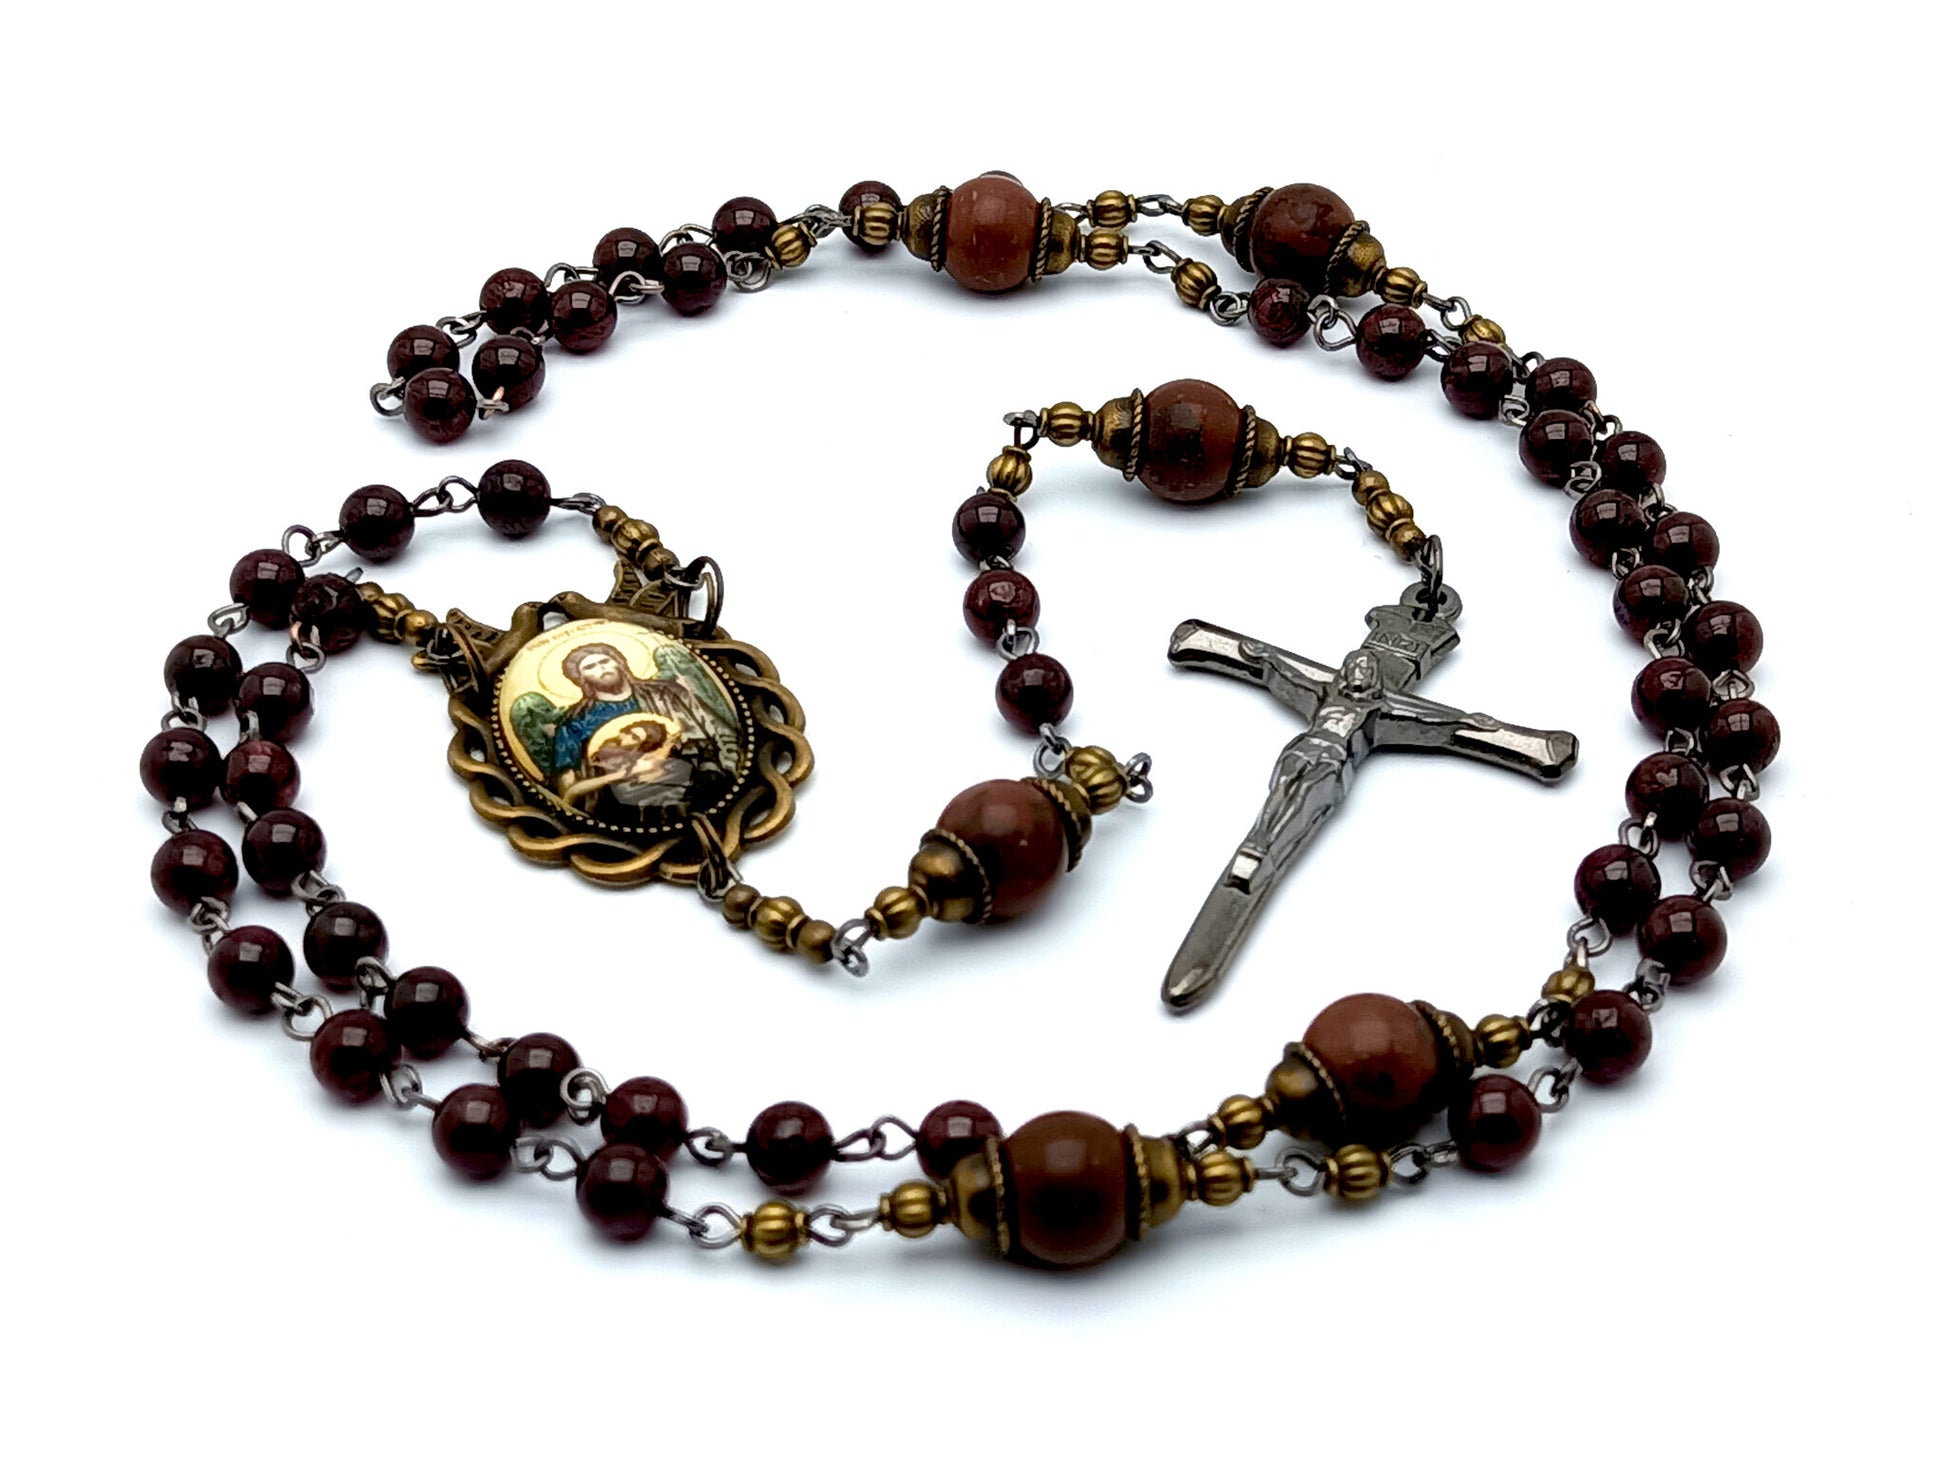 Saint Joan of Arc garnet gemstone rosary beads with Crowning of